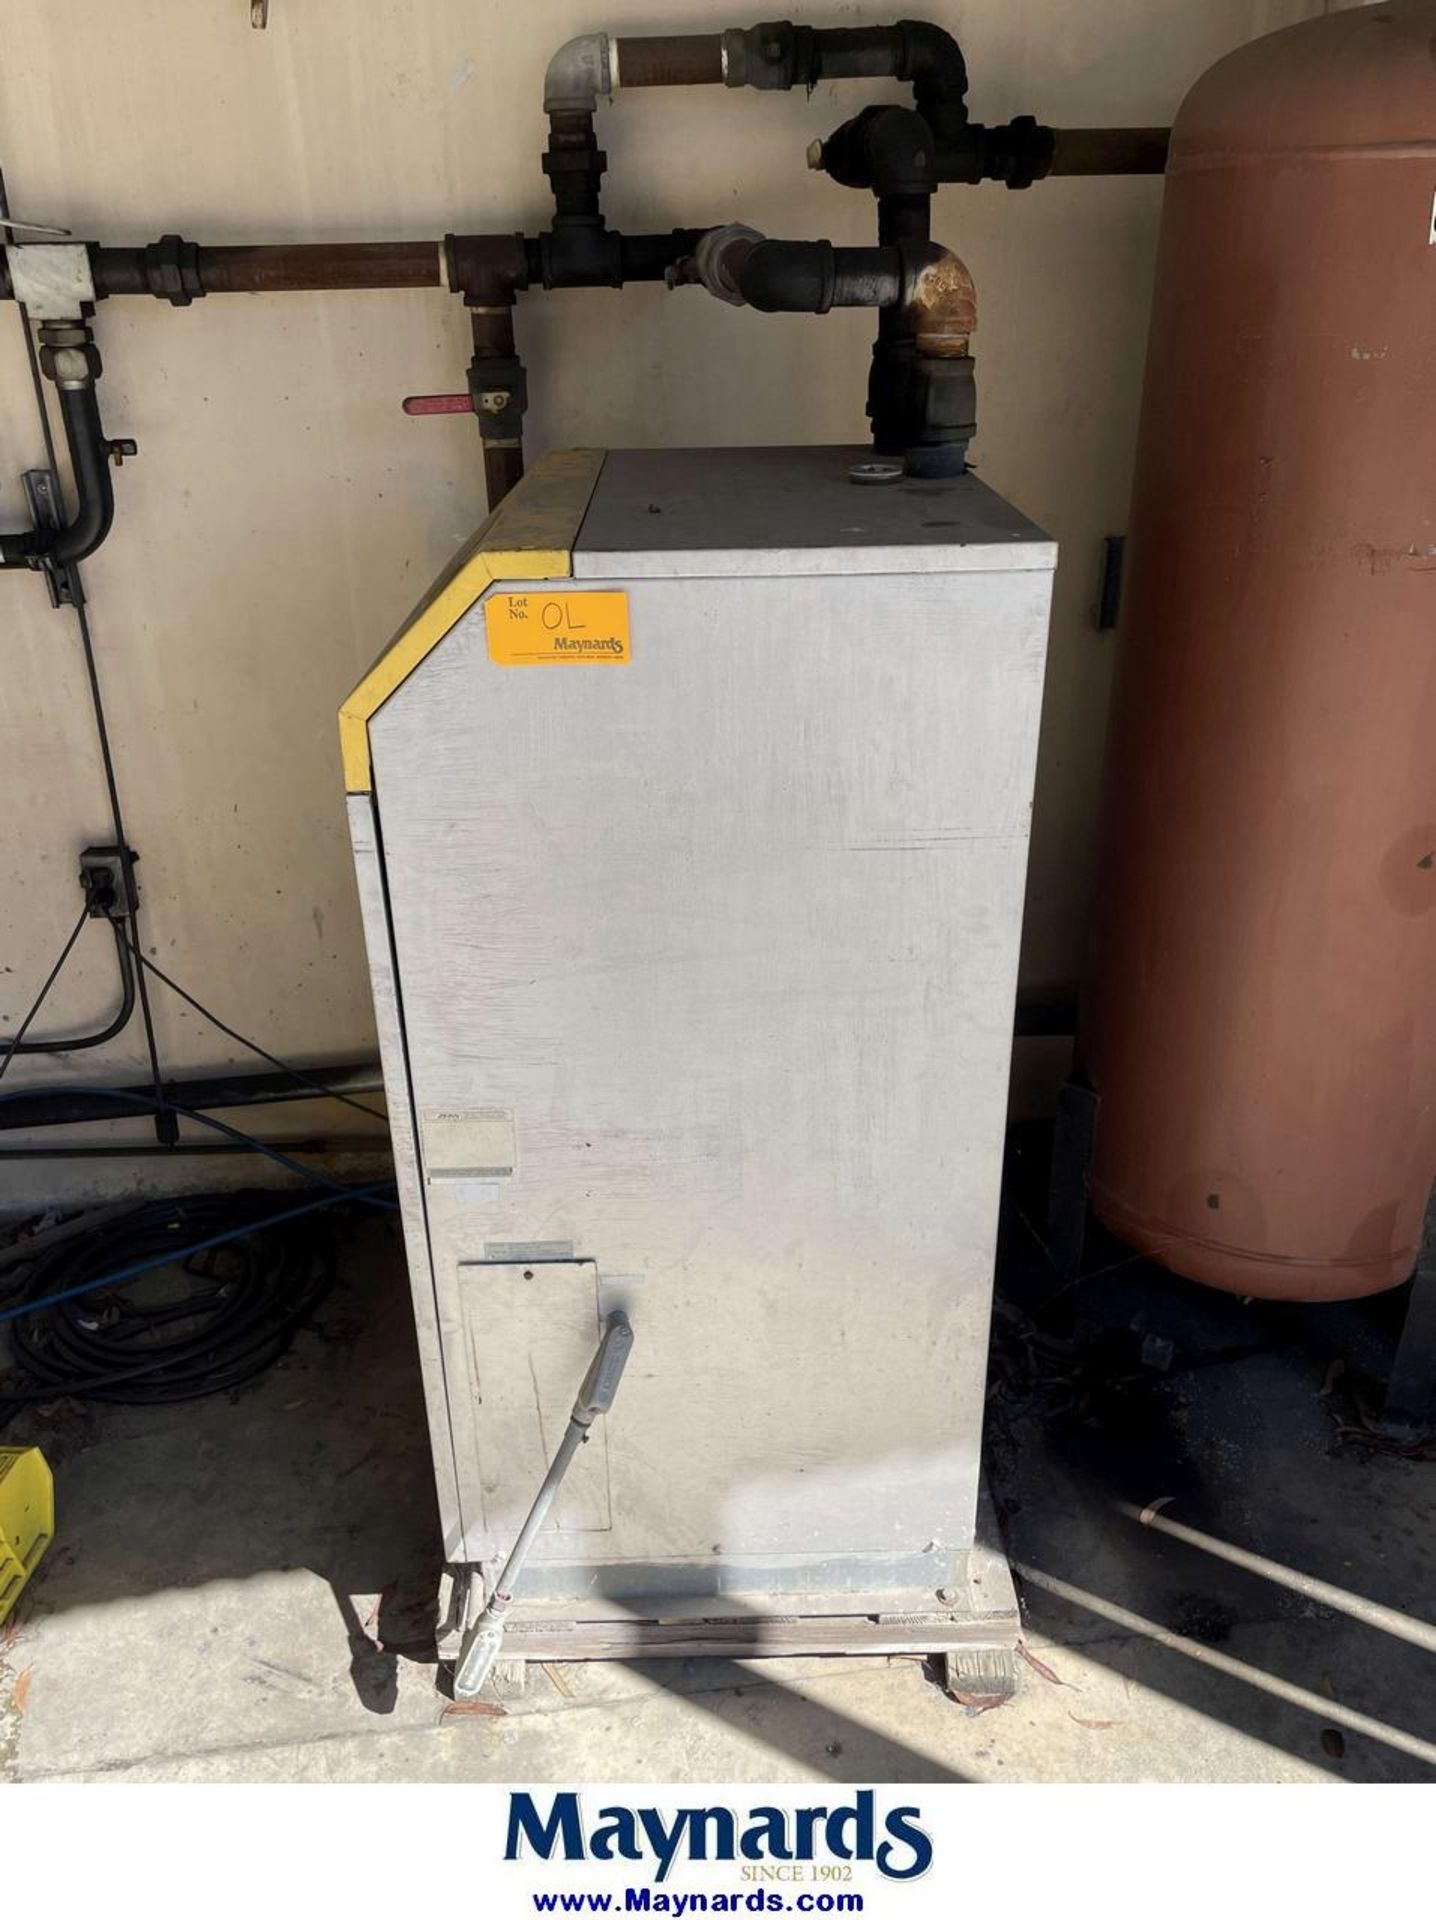 Zeks HeatSink Refrigerated Air Dryer (Display Board Does Not Work) - Image 2 of 5